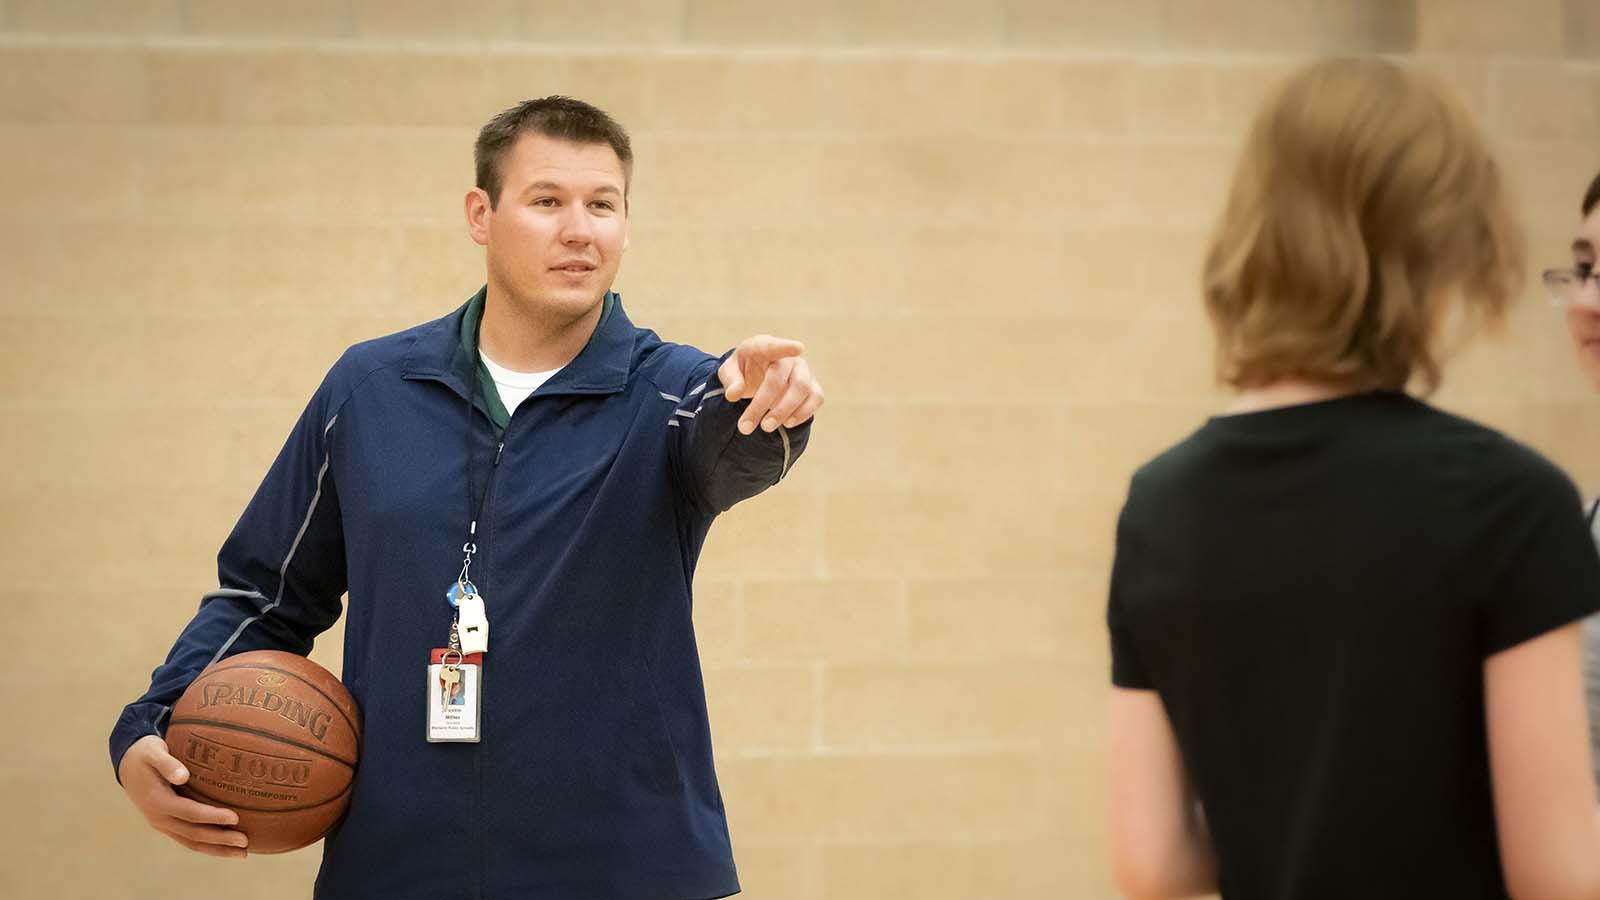 Physical education teacher teaching basketball to high school students